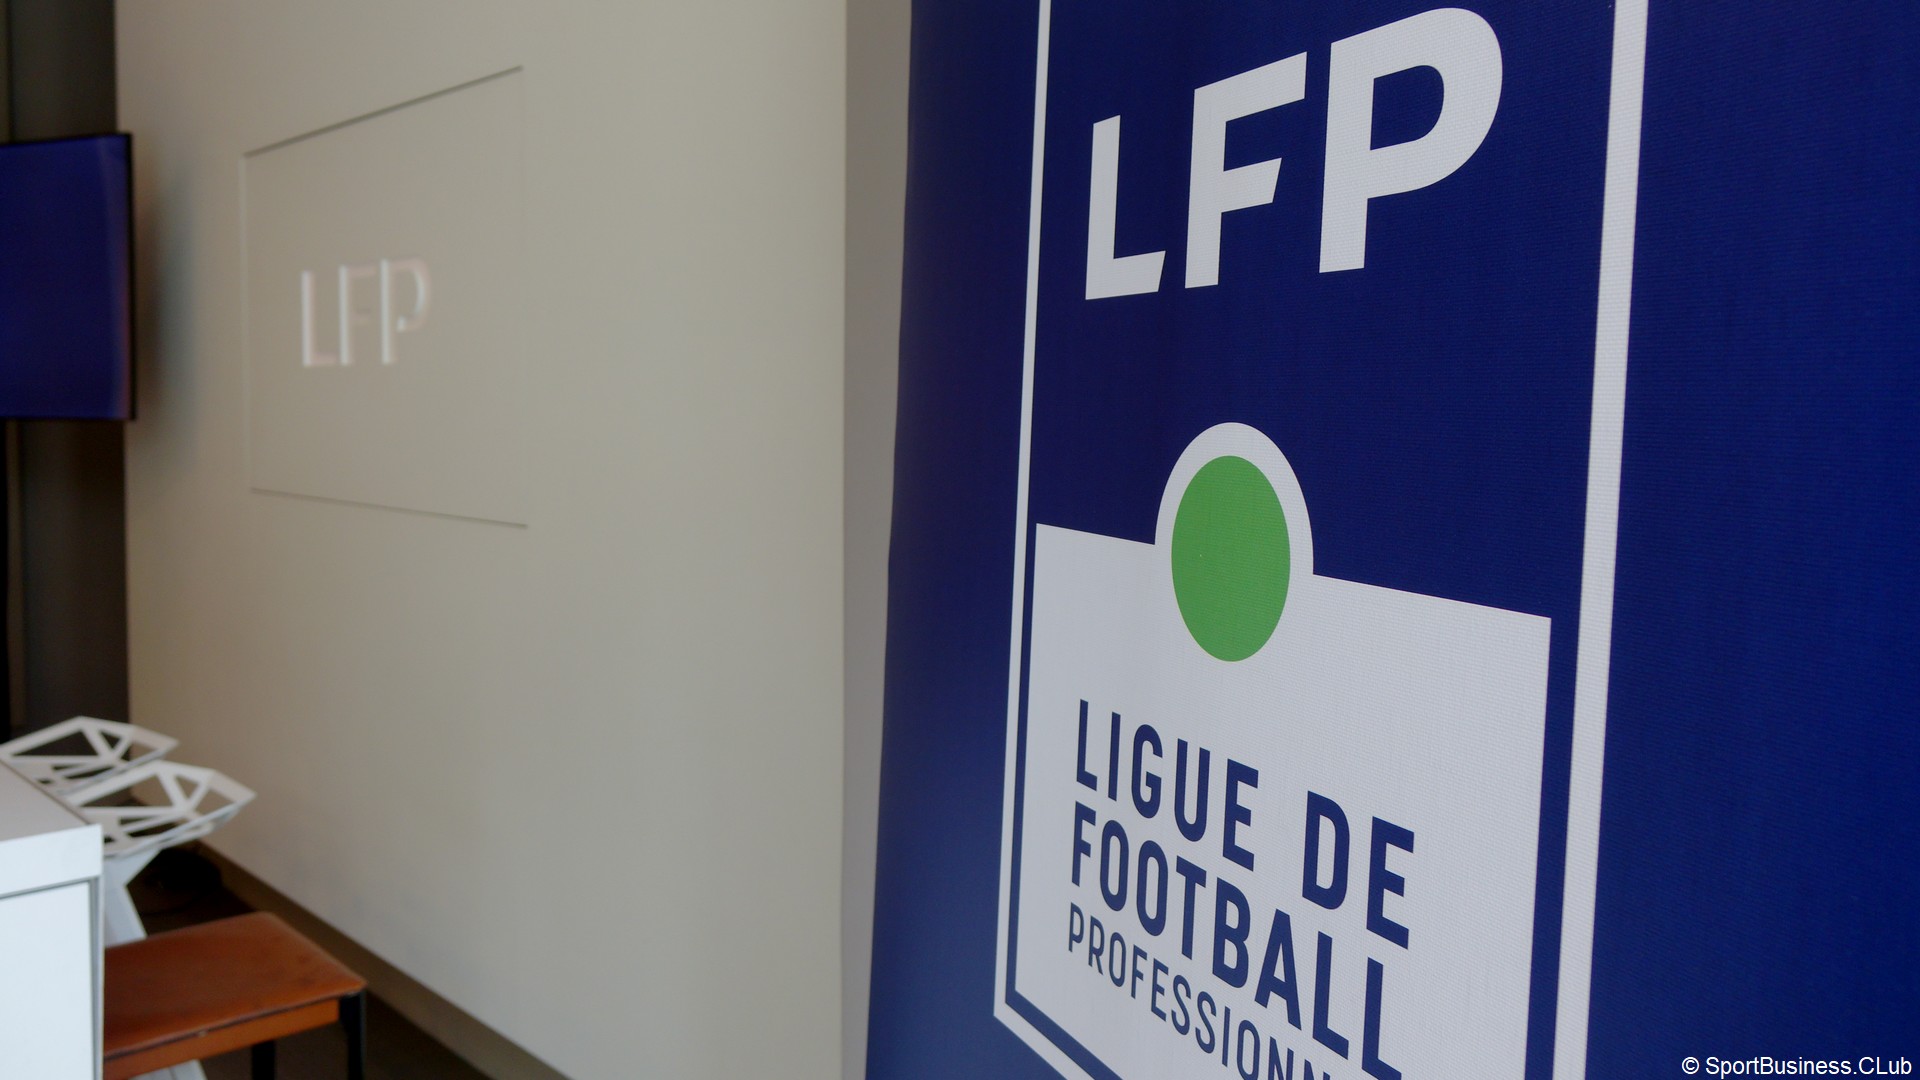 LFP – Ligue de football professionnel (2) Logo